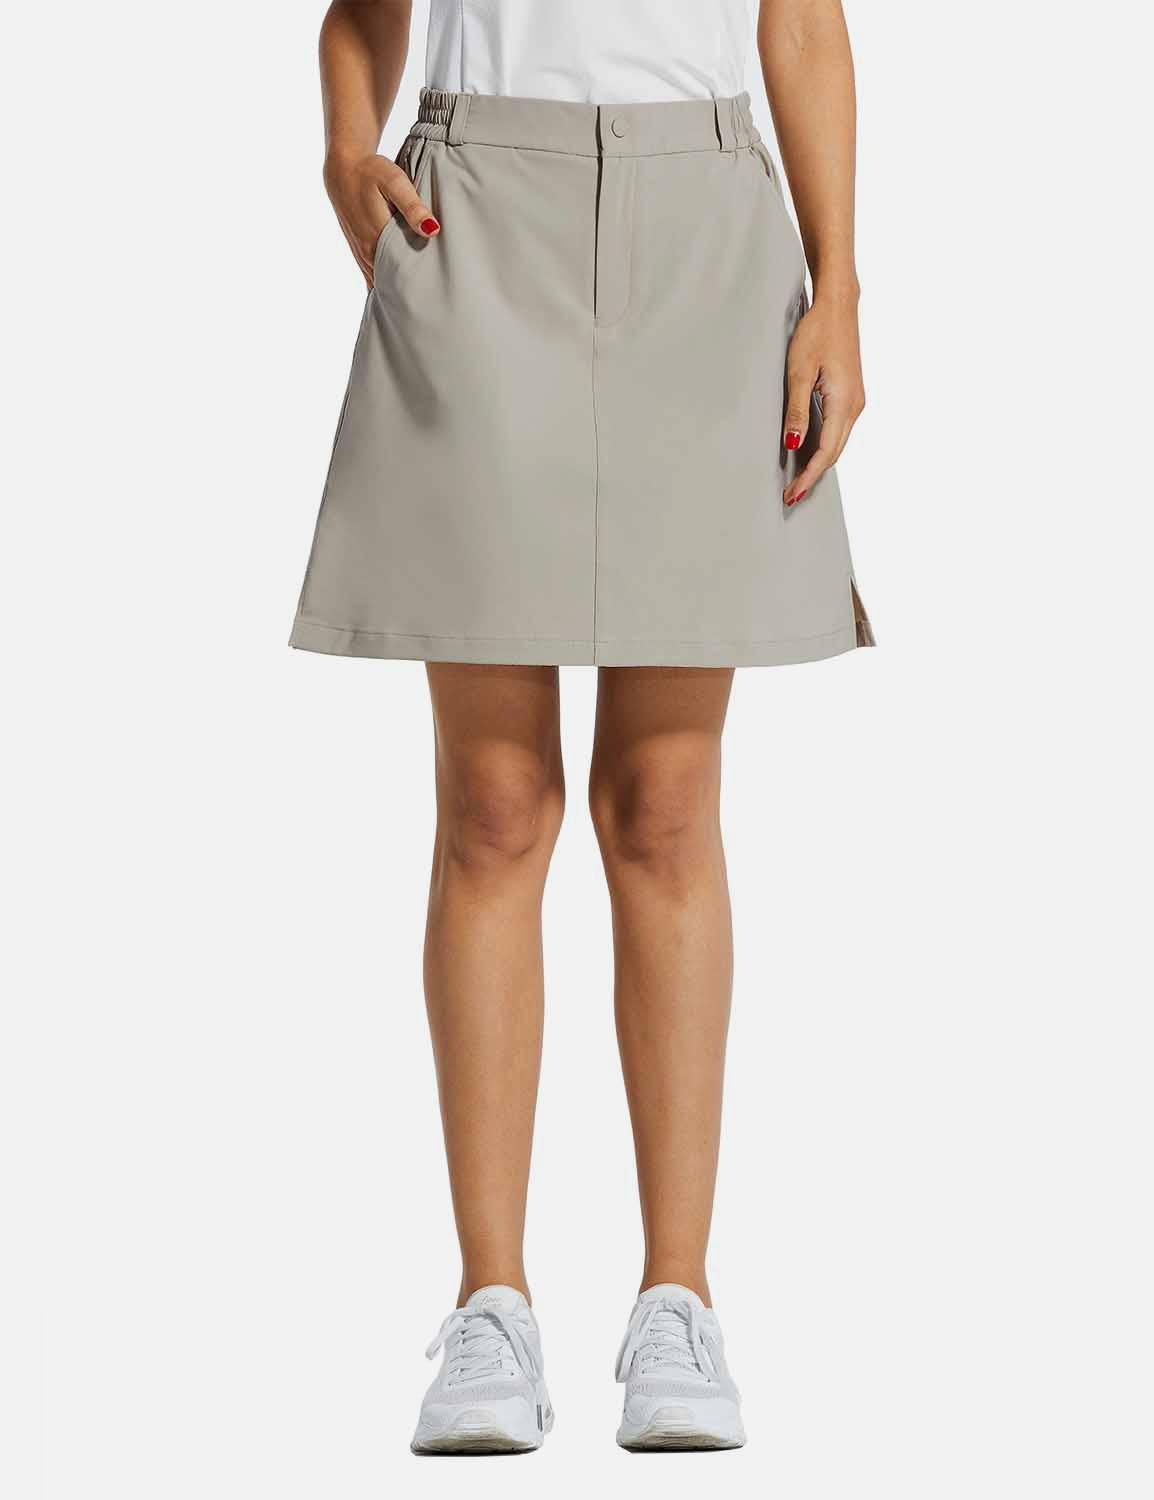 Baleaf Womens UPF 50+ High Rise Waterproof Flared Skirt w Zippered Pocket cga003 Neutral Gray Front